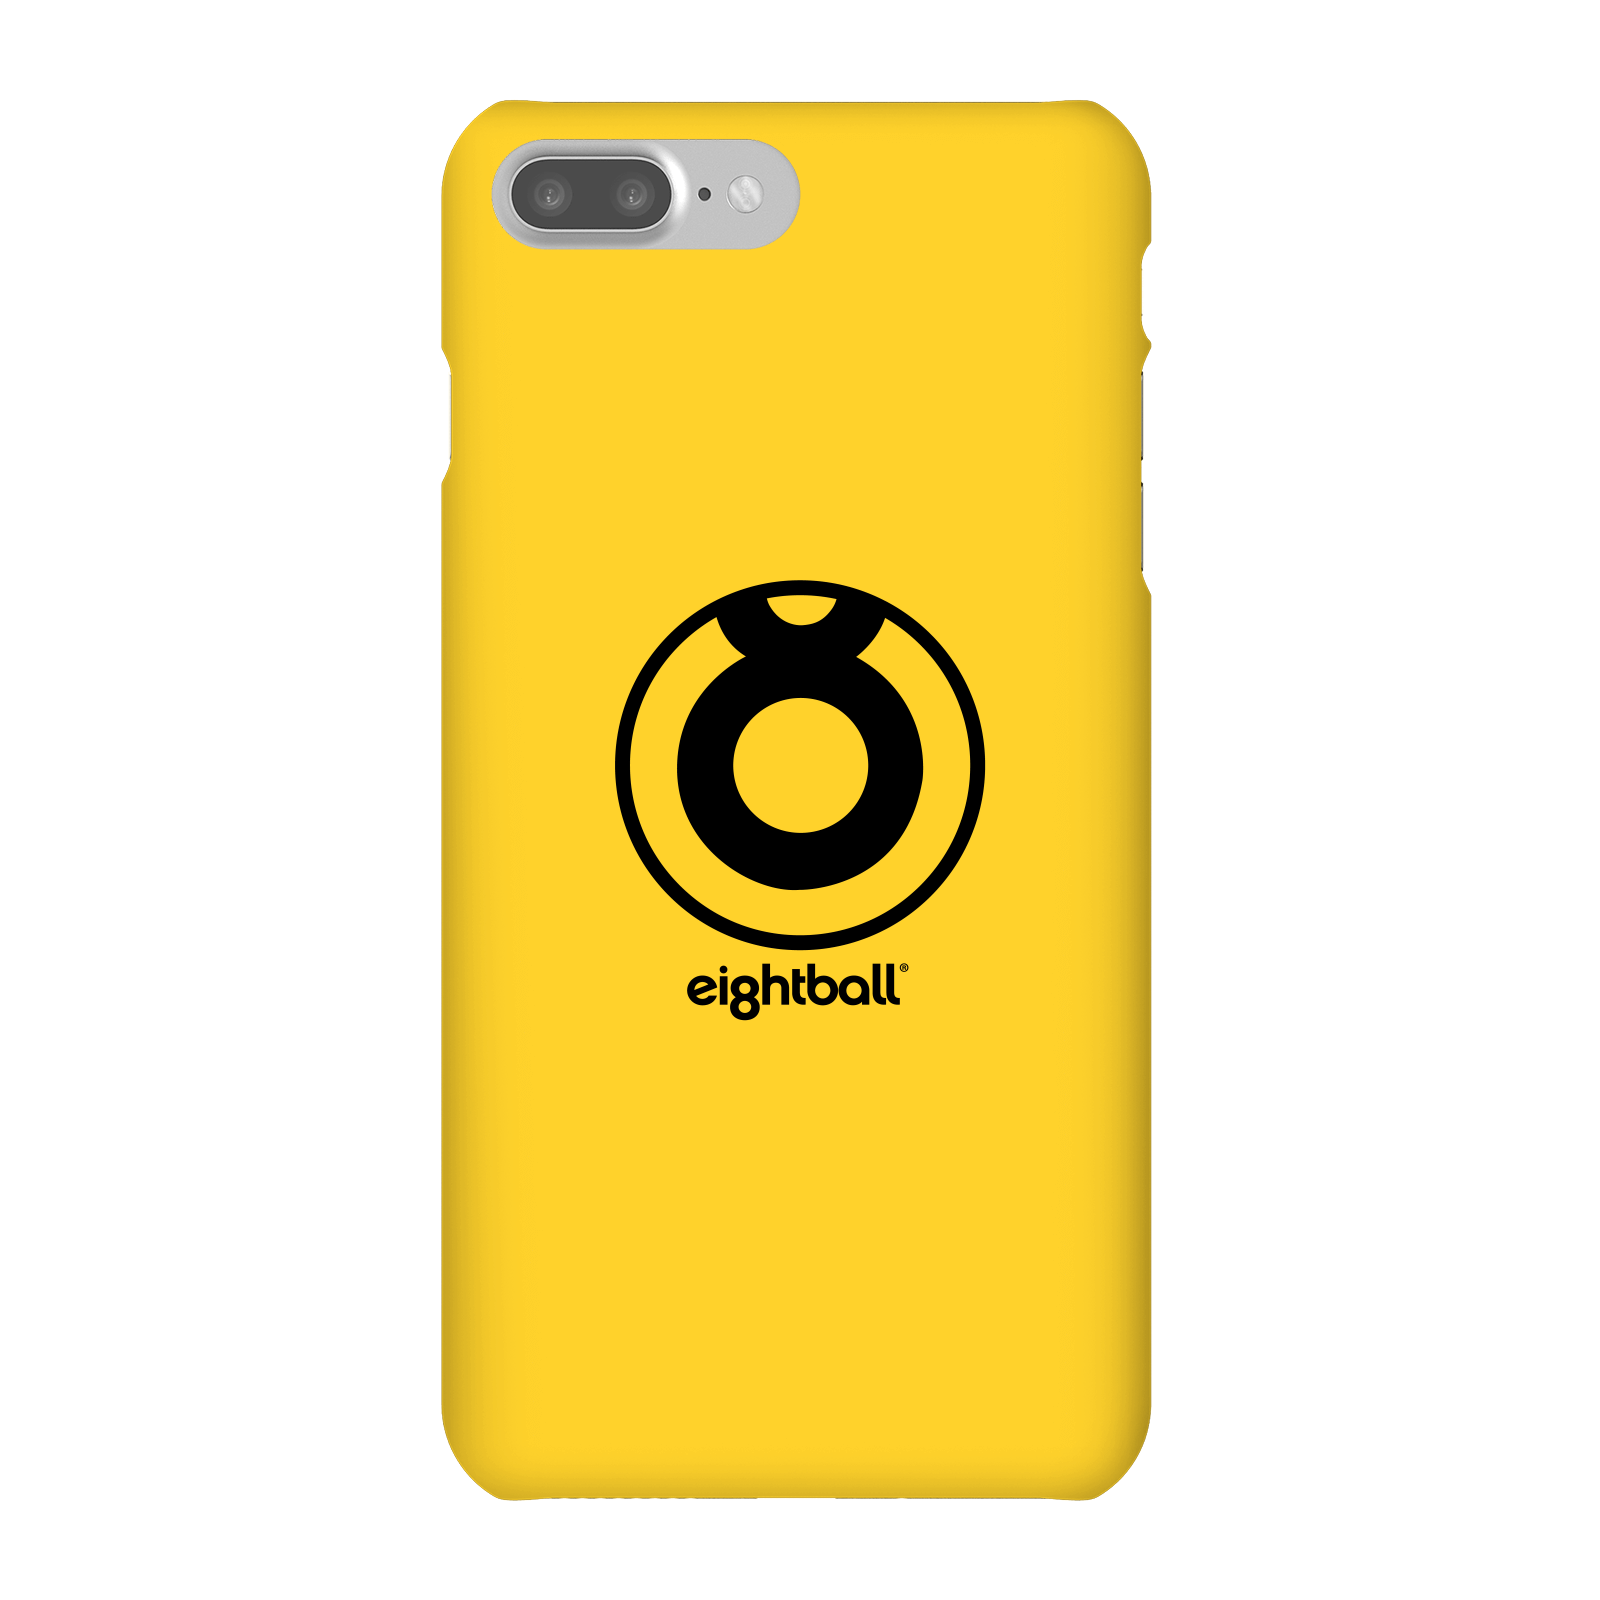 Funda Móvil Ei8htball Large Circle Logo para iPhone y Android - iPhone 7 Plus - Carcasa rígida - Mate